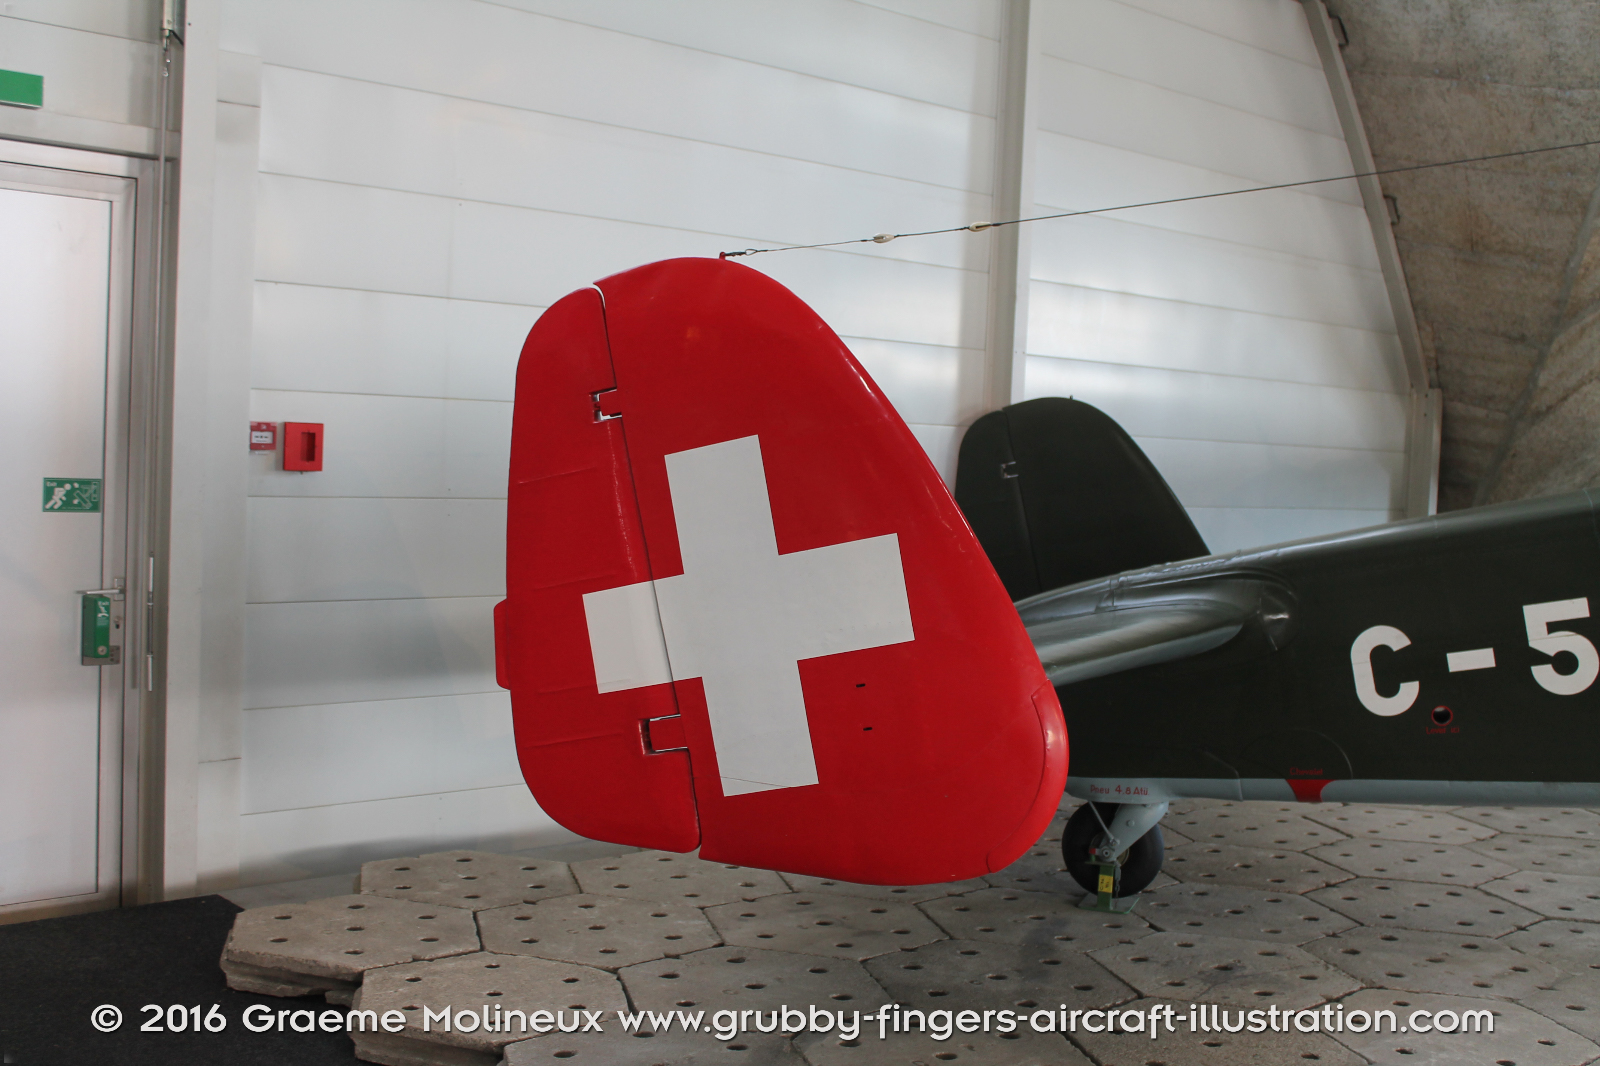 K+W_C-36_C-534_Swiss_Air_Force_Museum_2015_06_GrubbyFingers